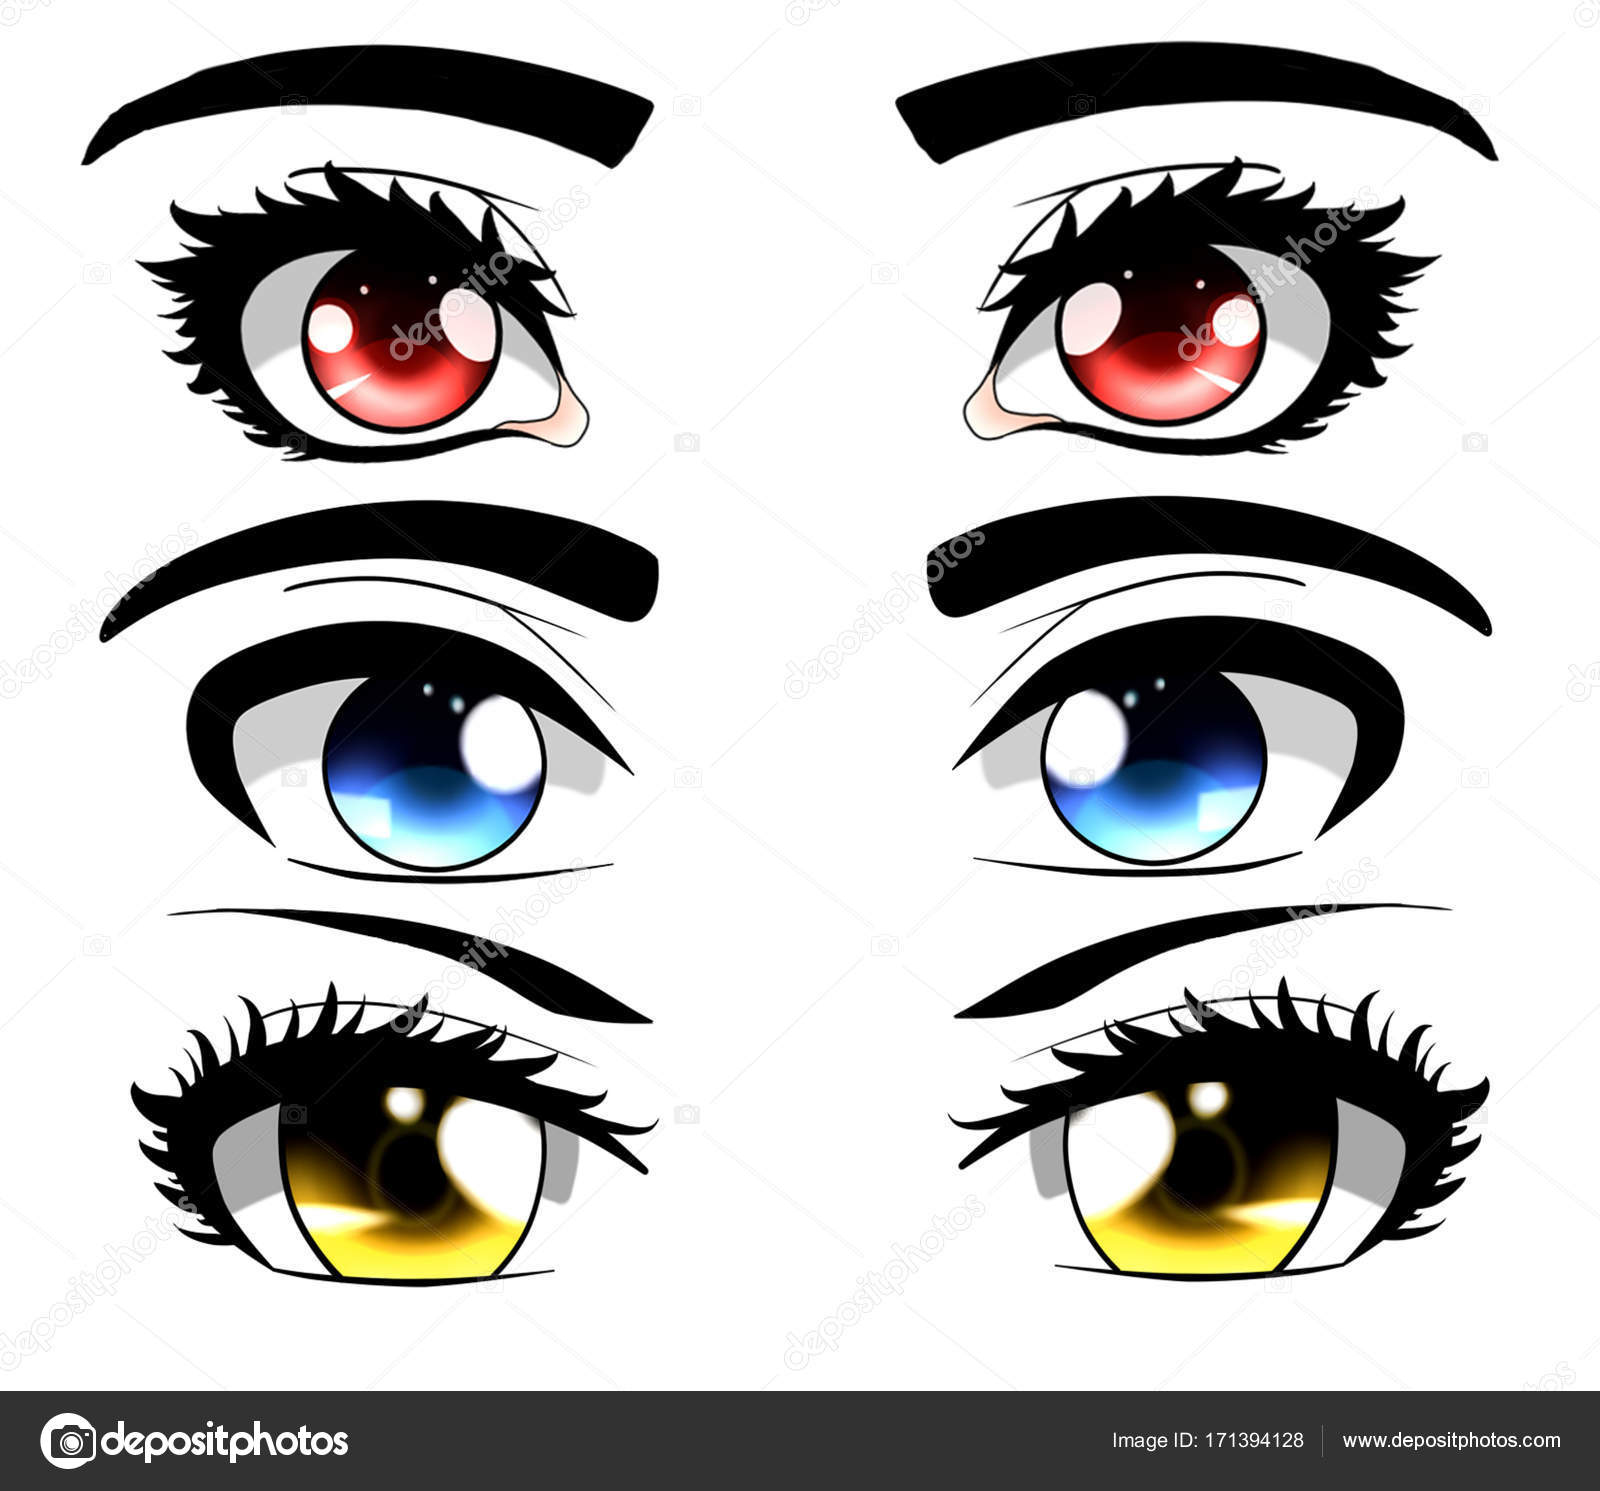 Anime eyes Stock Photos, Royalty Free Anime eyes Images | Depositphotos